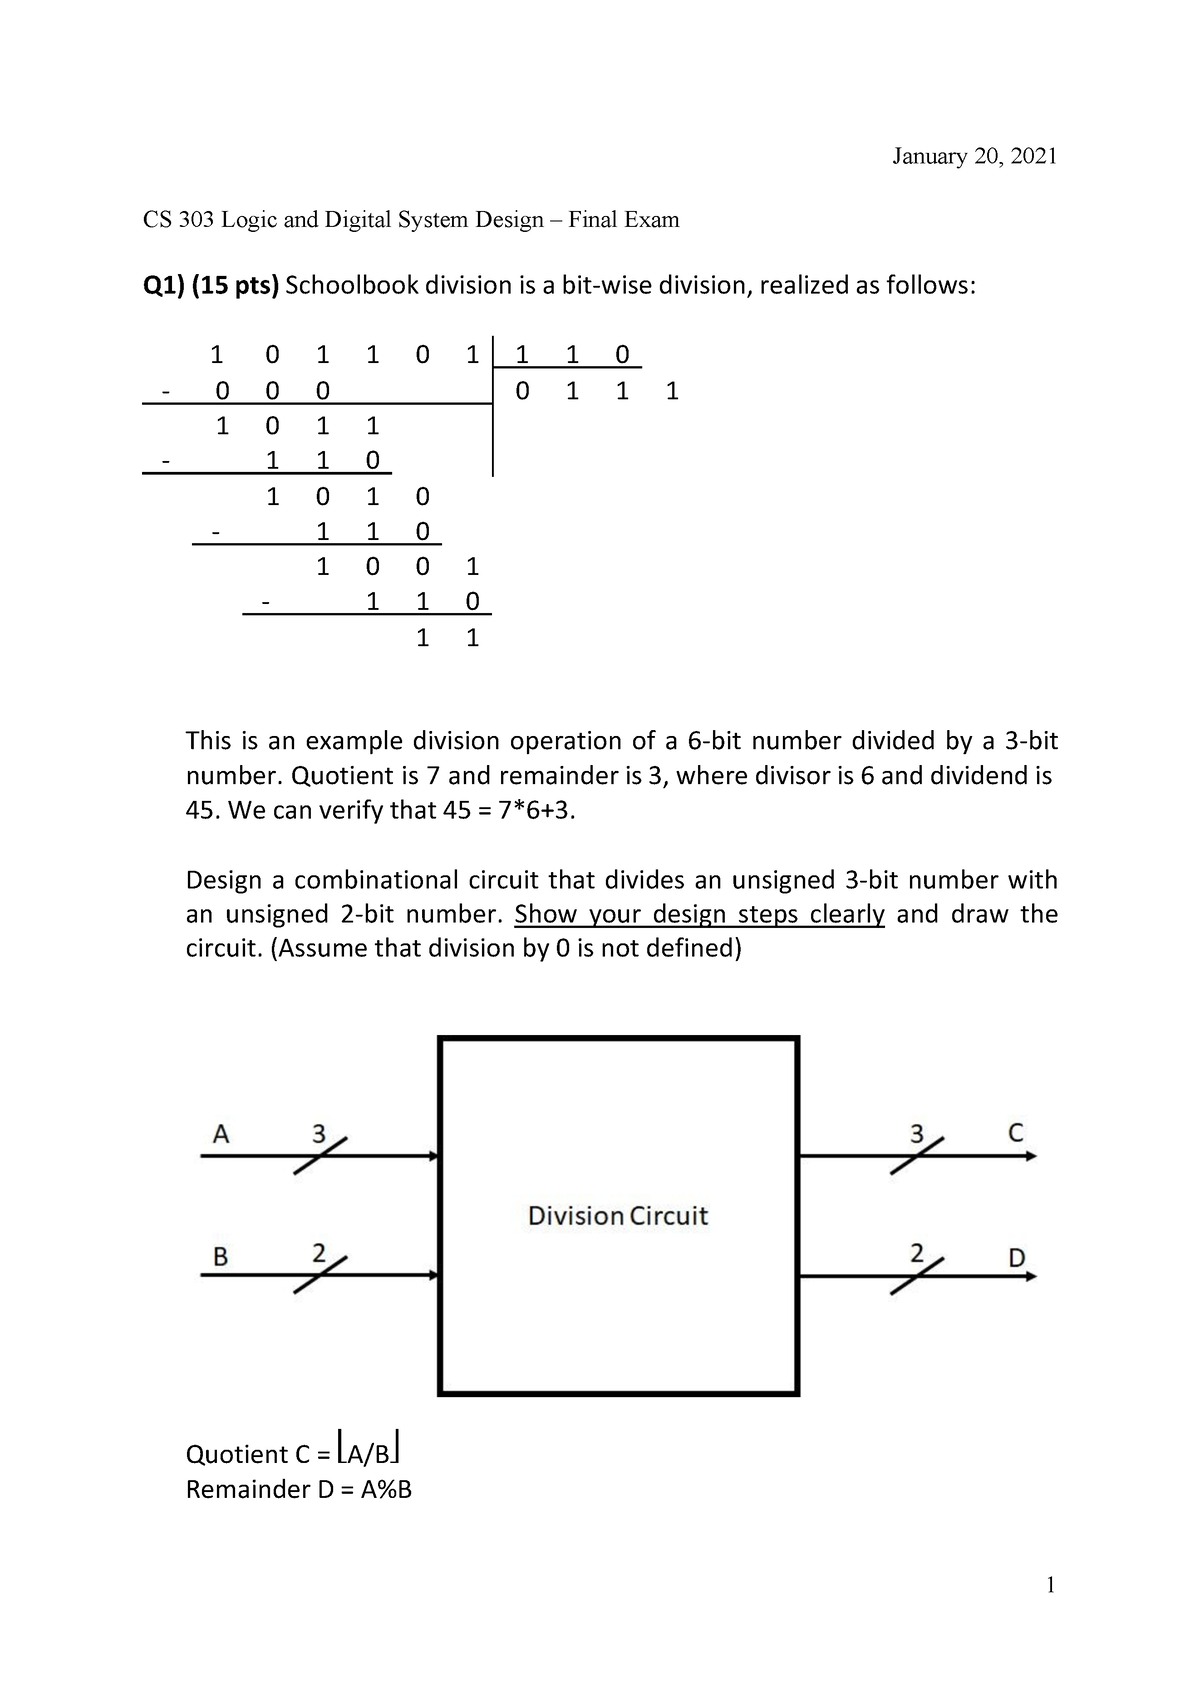 Sabancı CS 201 Midterm 2 Solutions, PDF, Text File